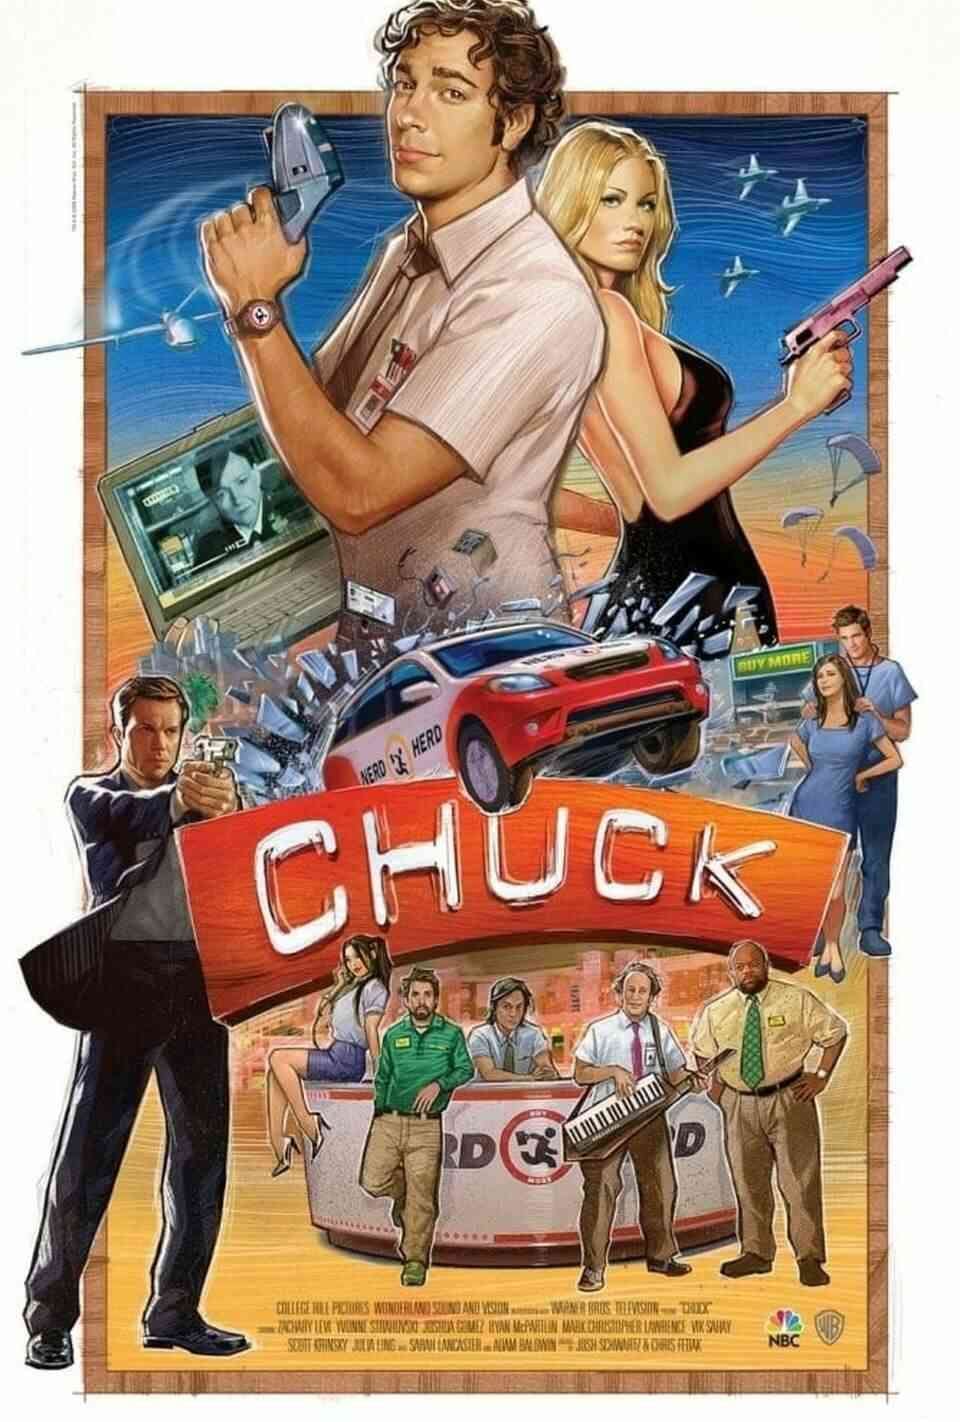 Read Chuck screenplay.